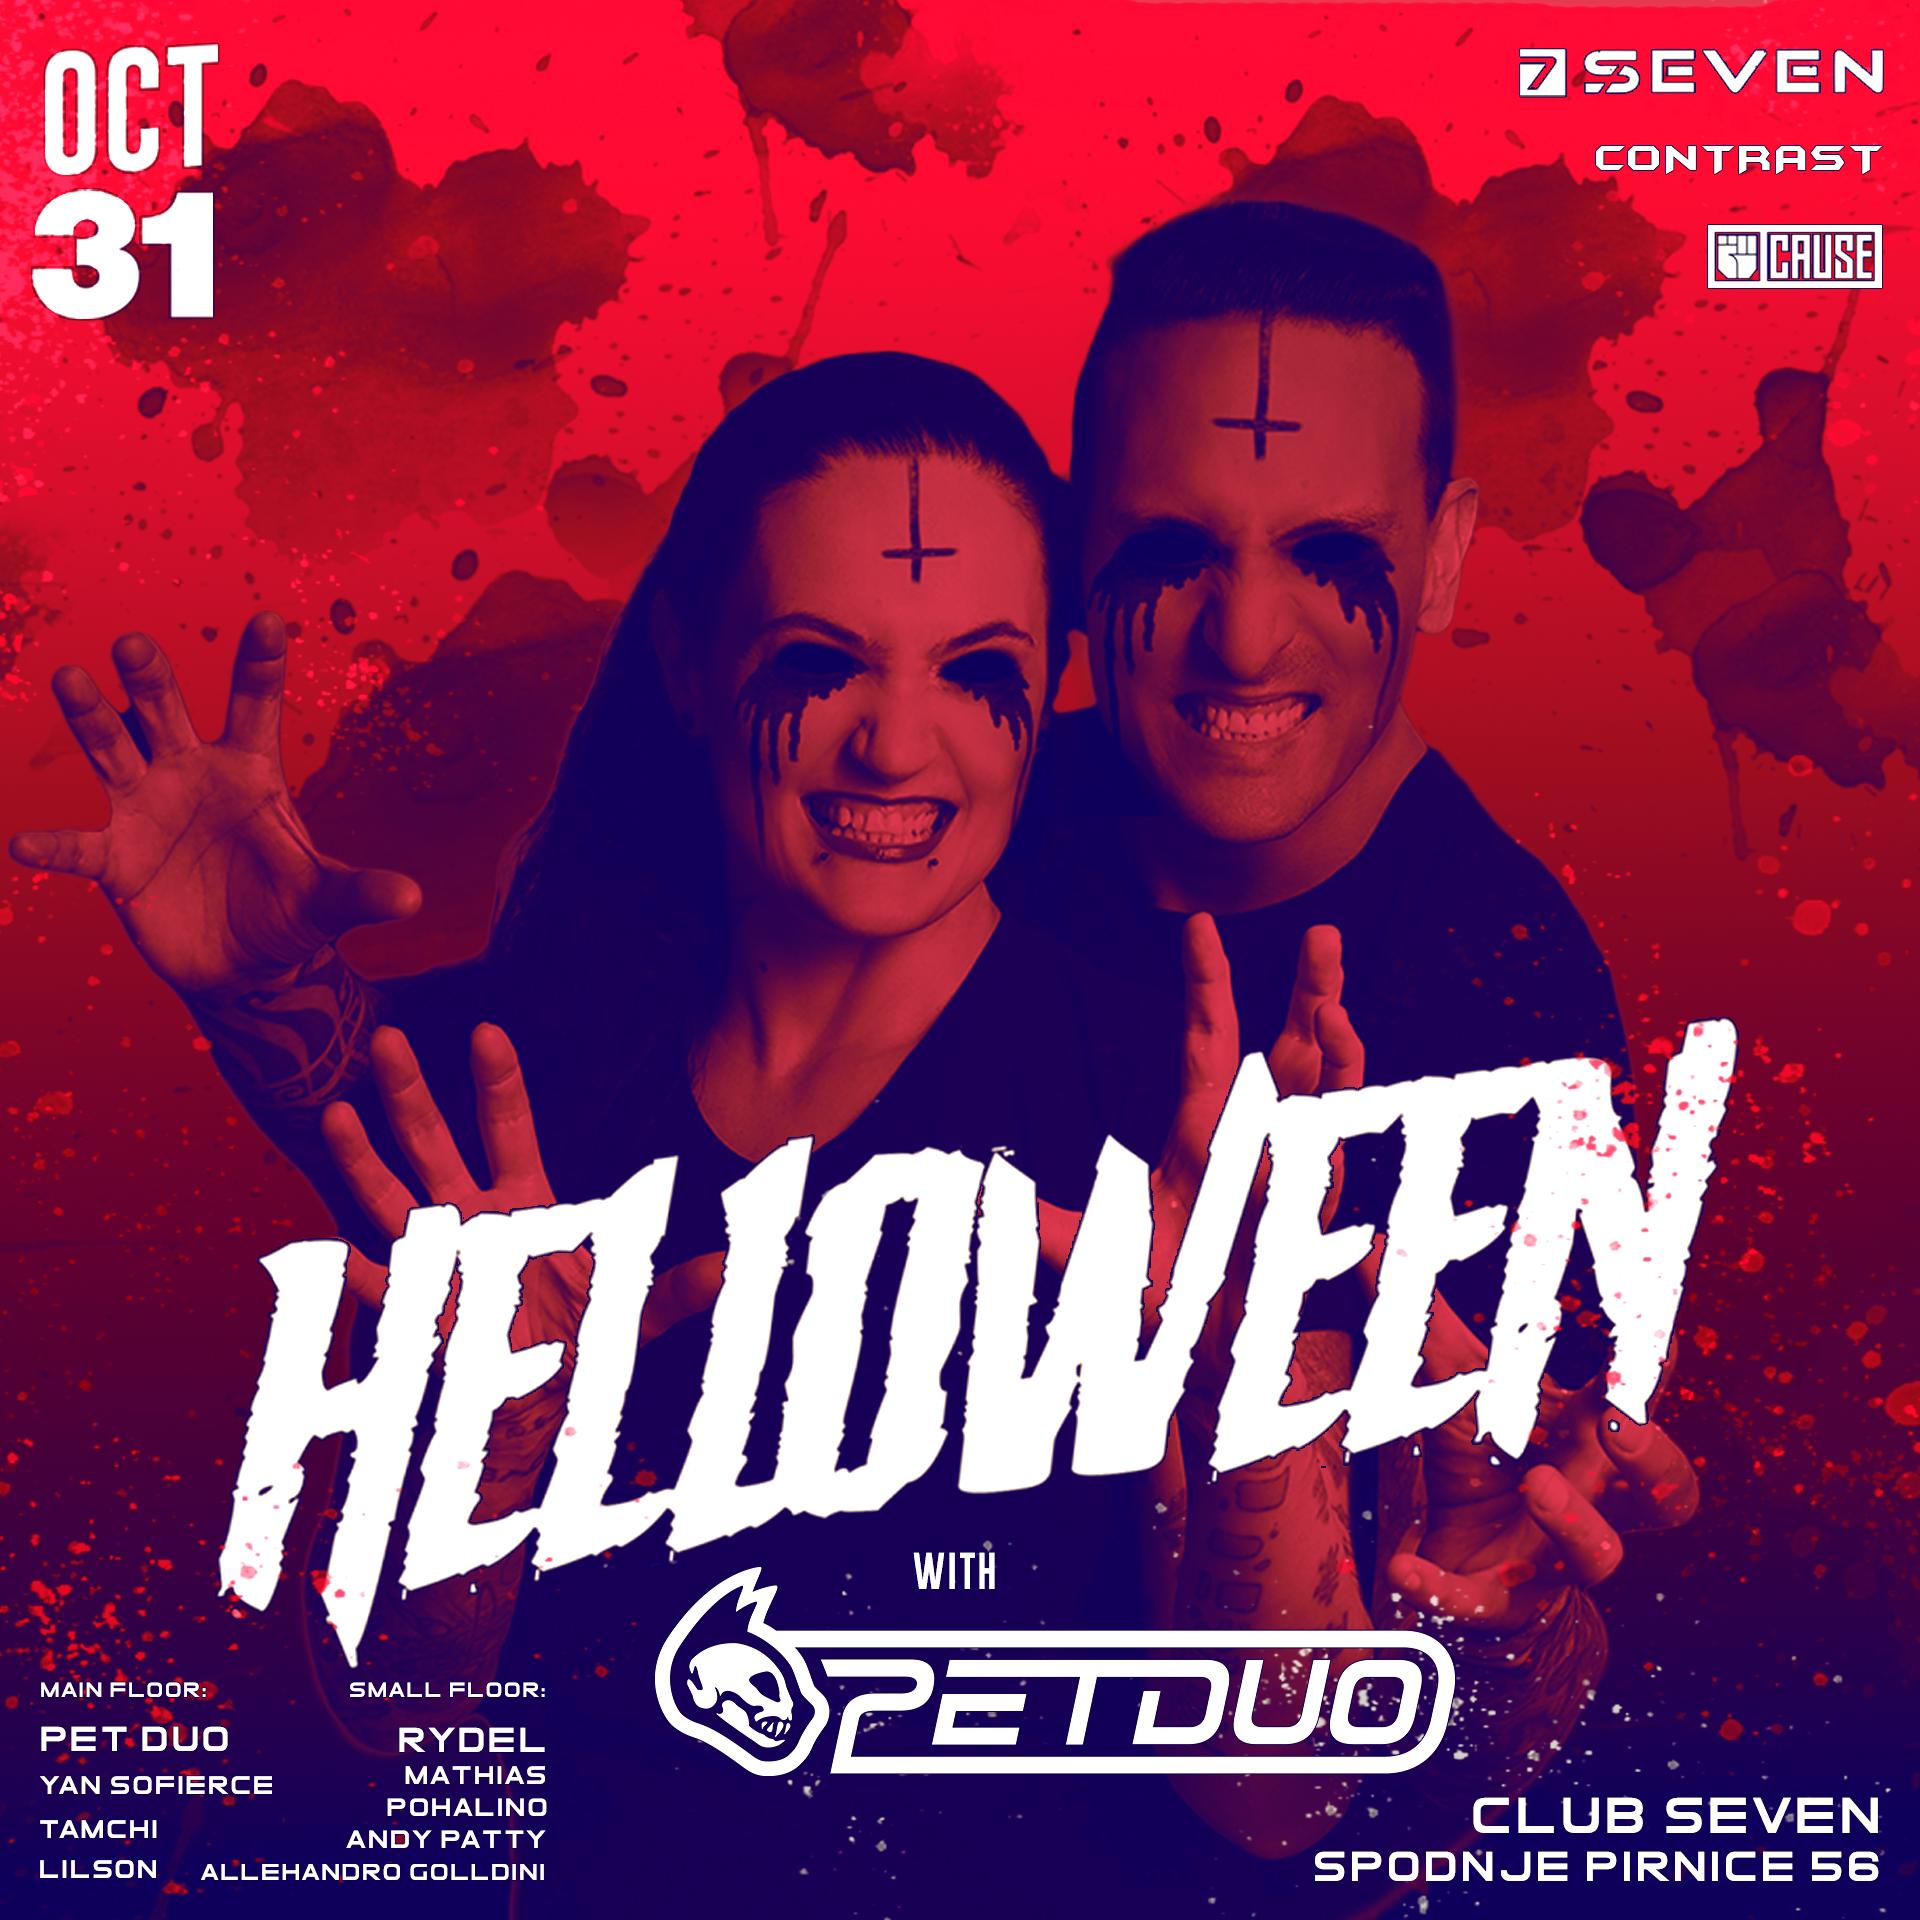 Helloween @ Club Seven, Ljubljana, Slovenjia - 31.10.2021